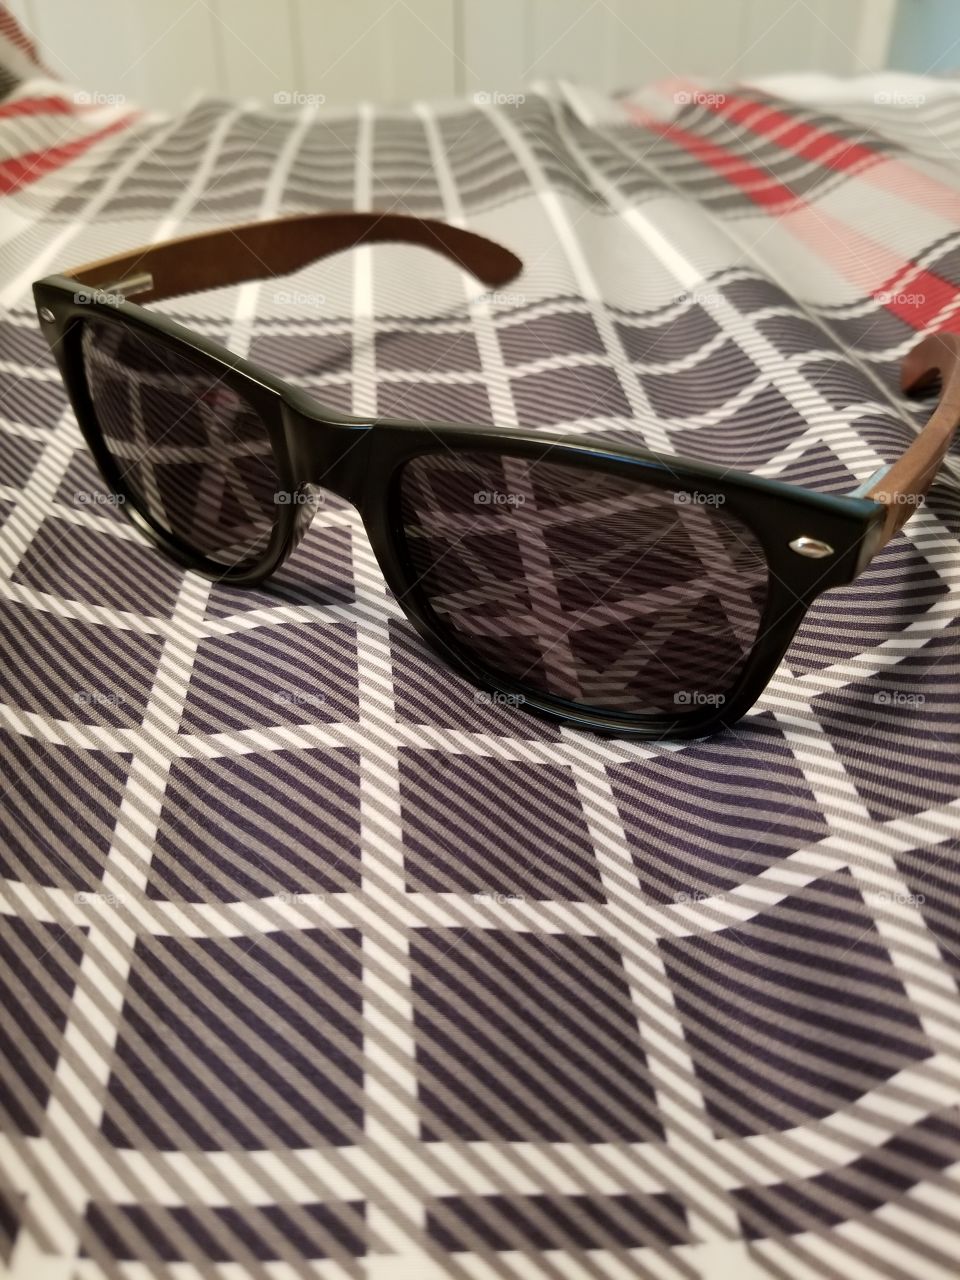 sunglasses 2